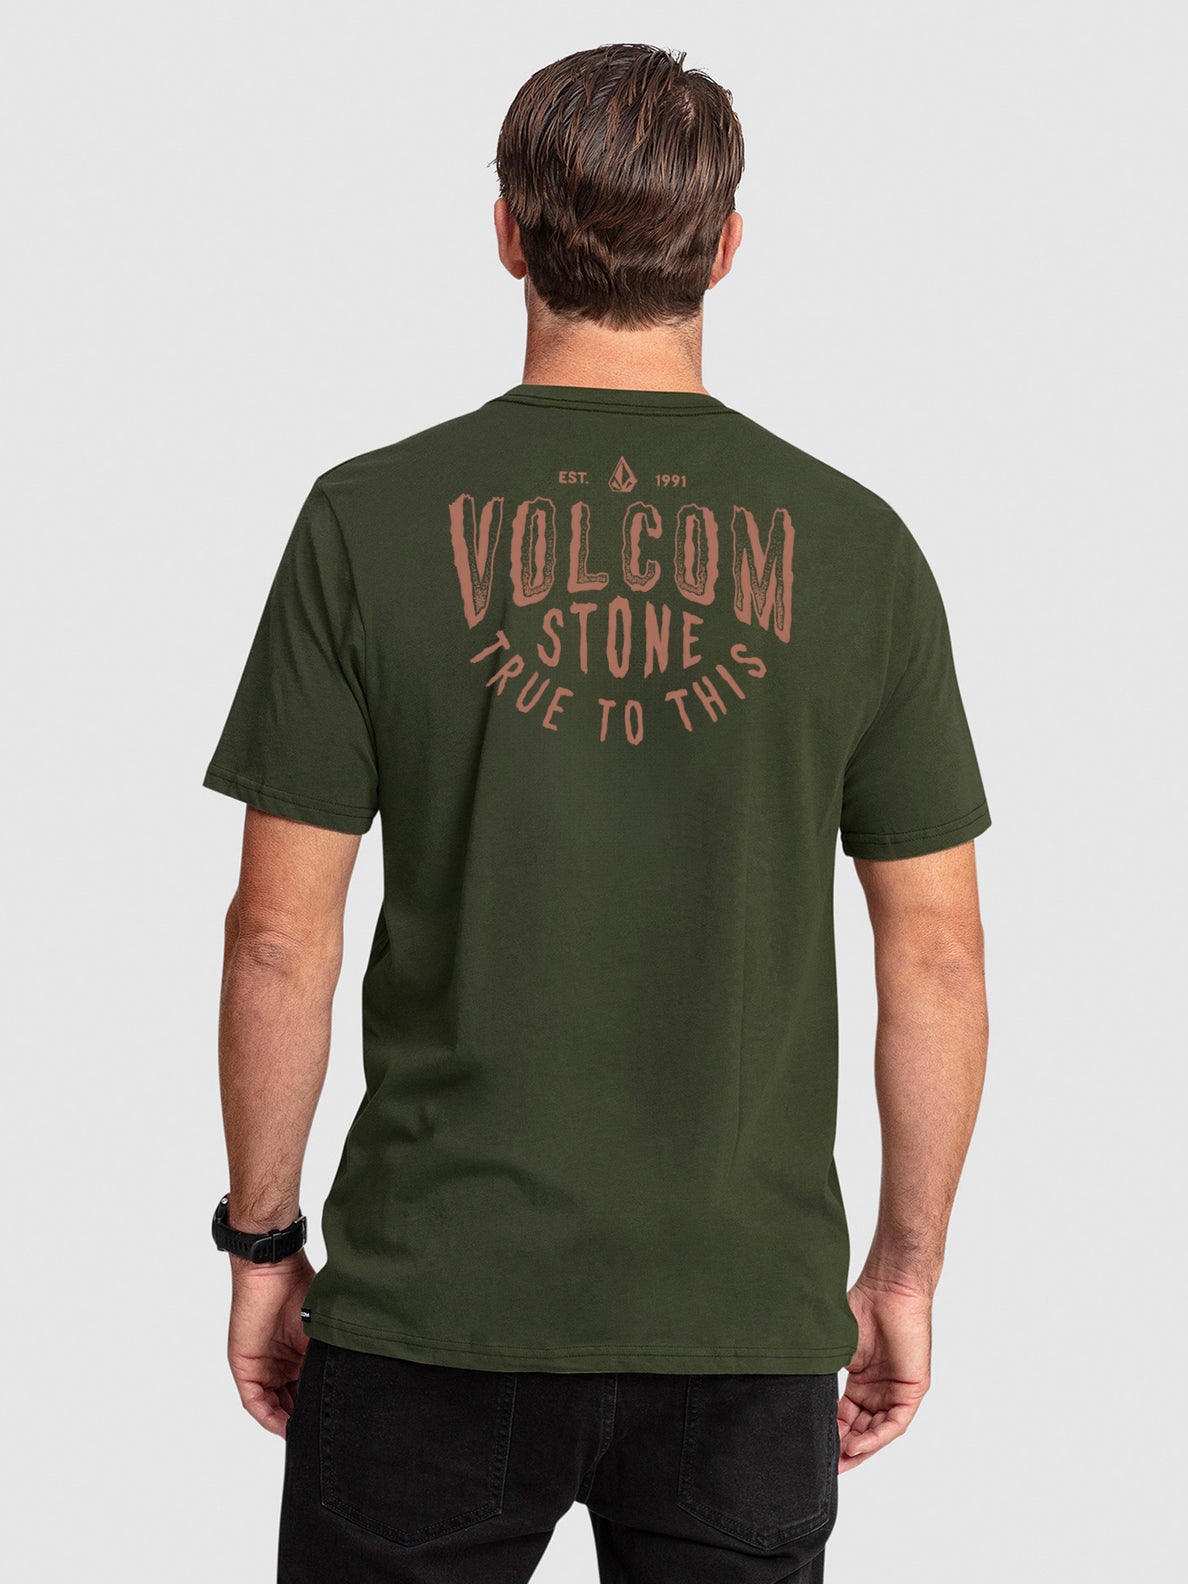 Stone True To This Short Sleeve T-Shirt - Wintermoss